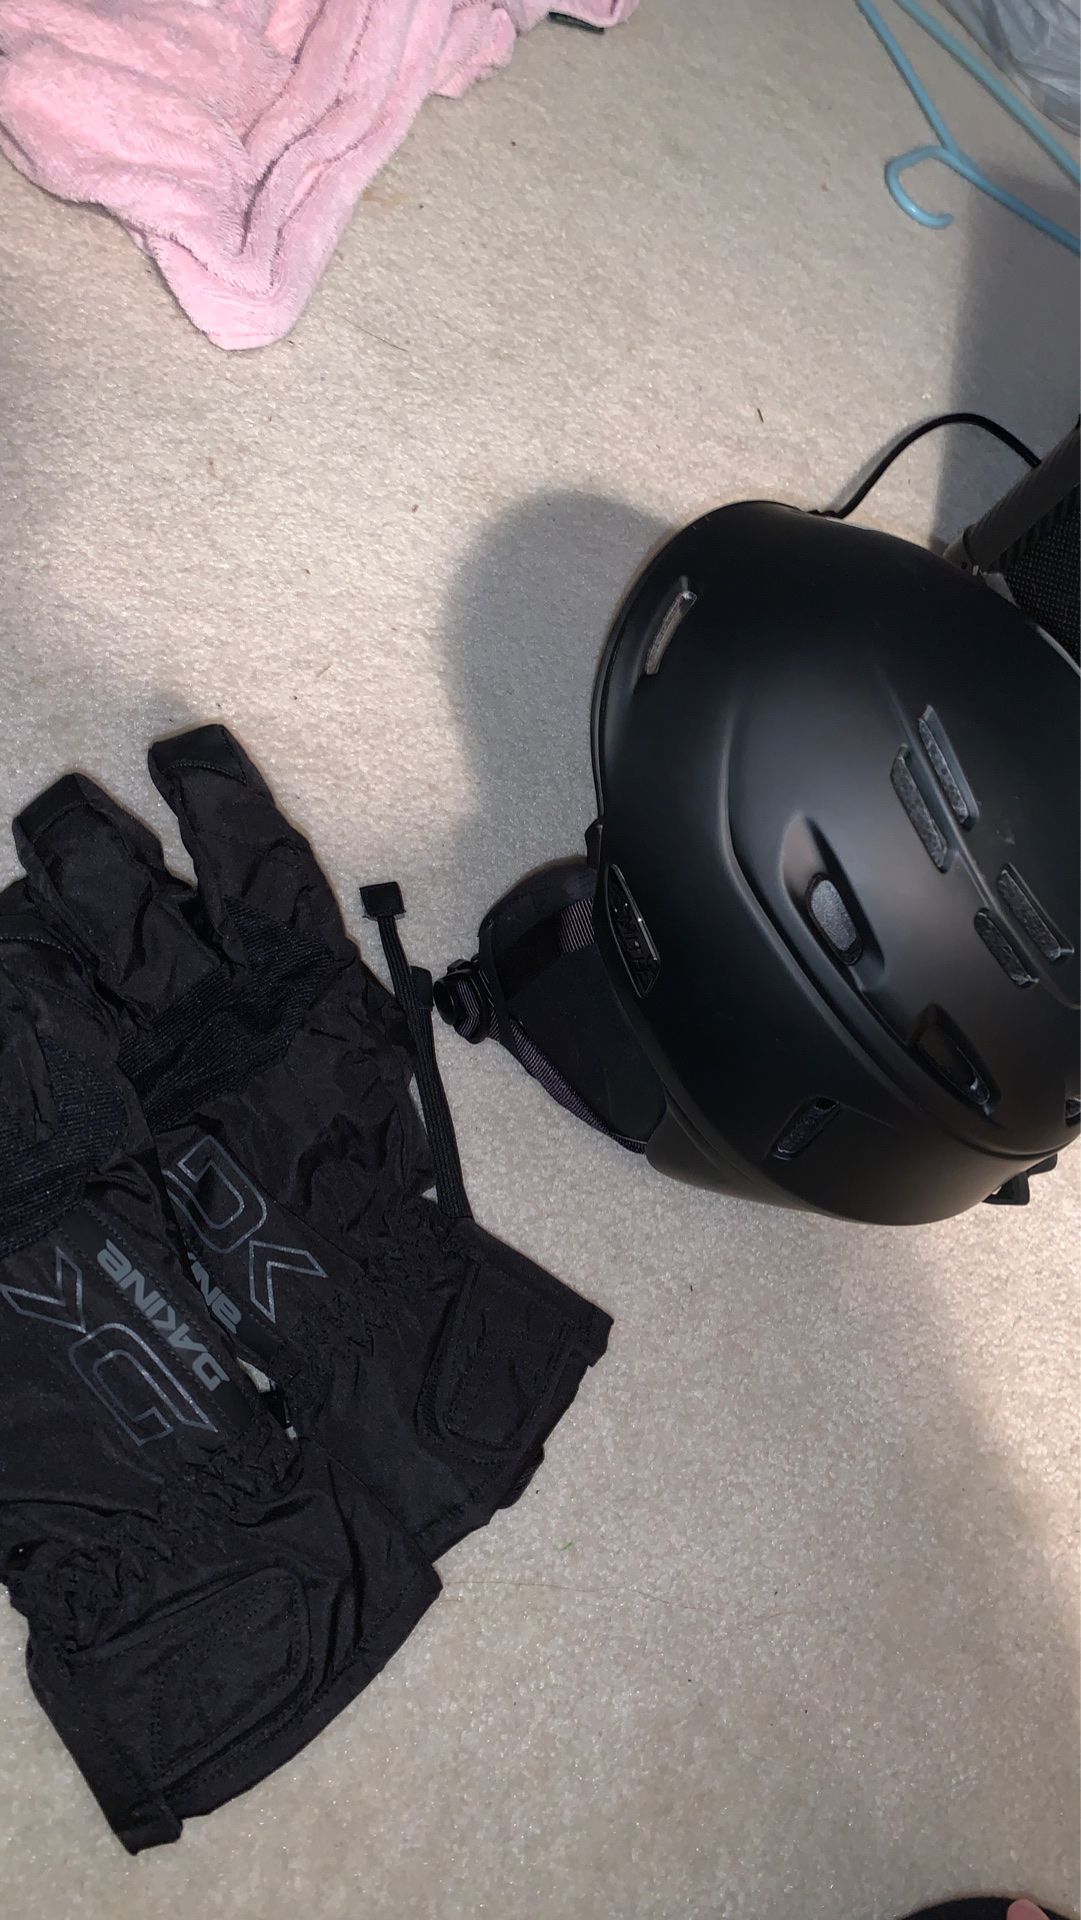 Snowboarding helmet + heavy duty gloves